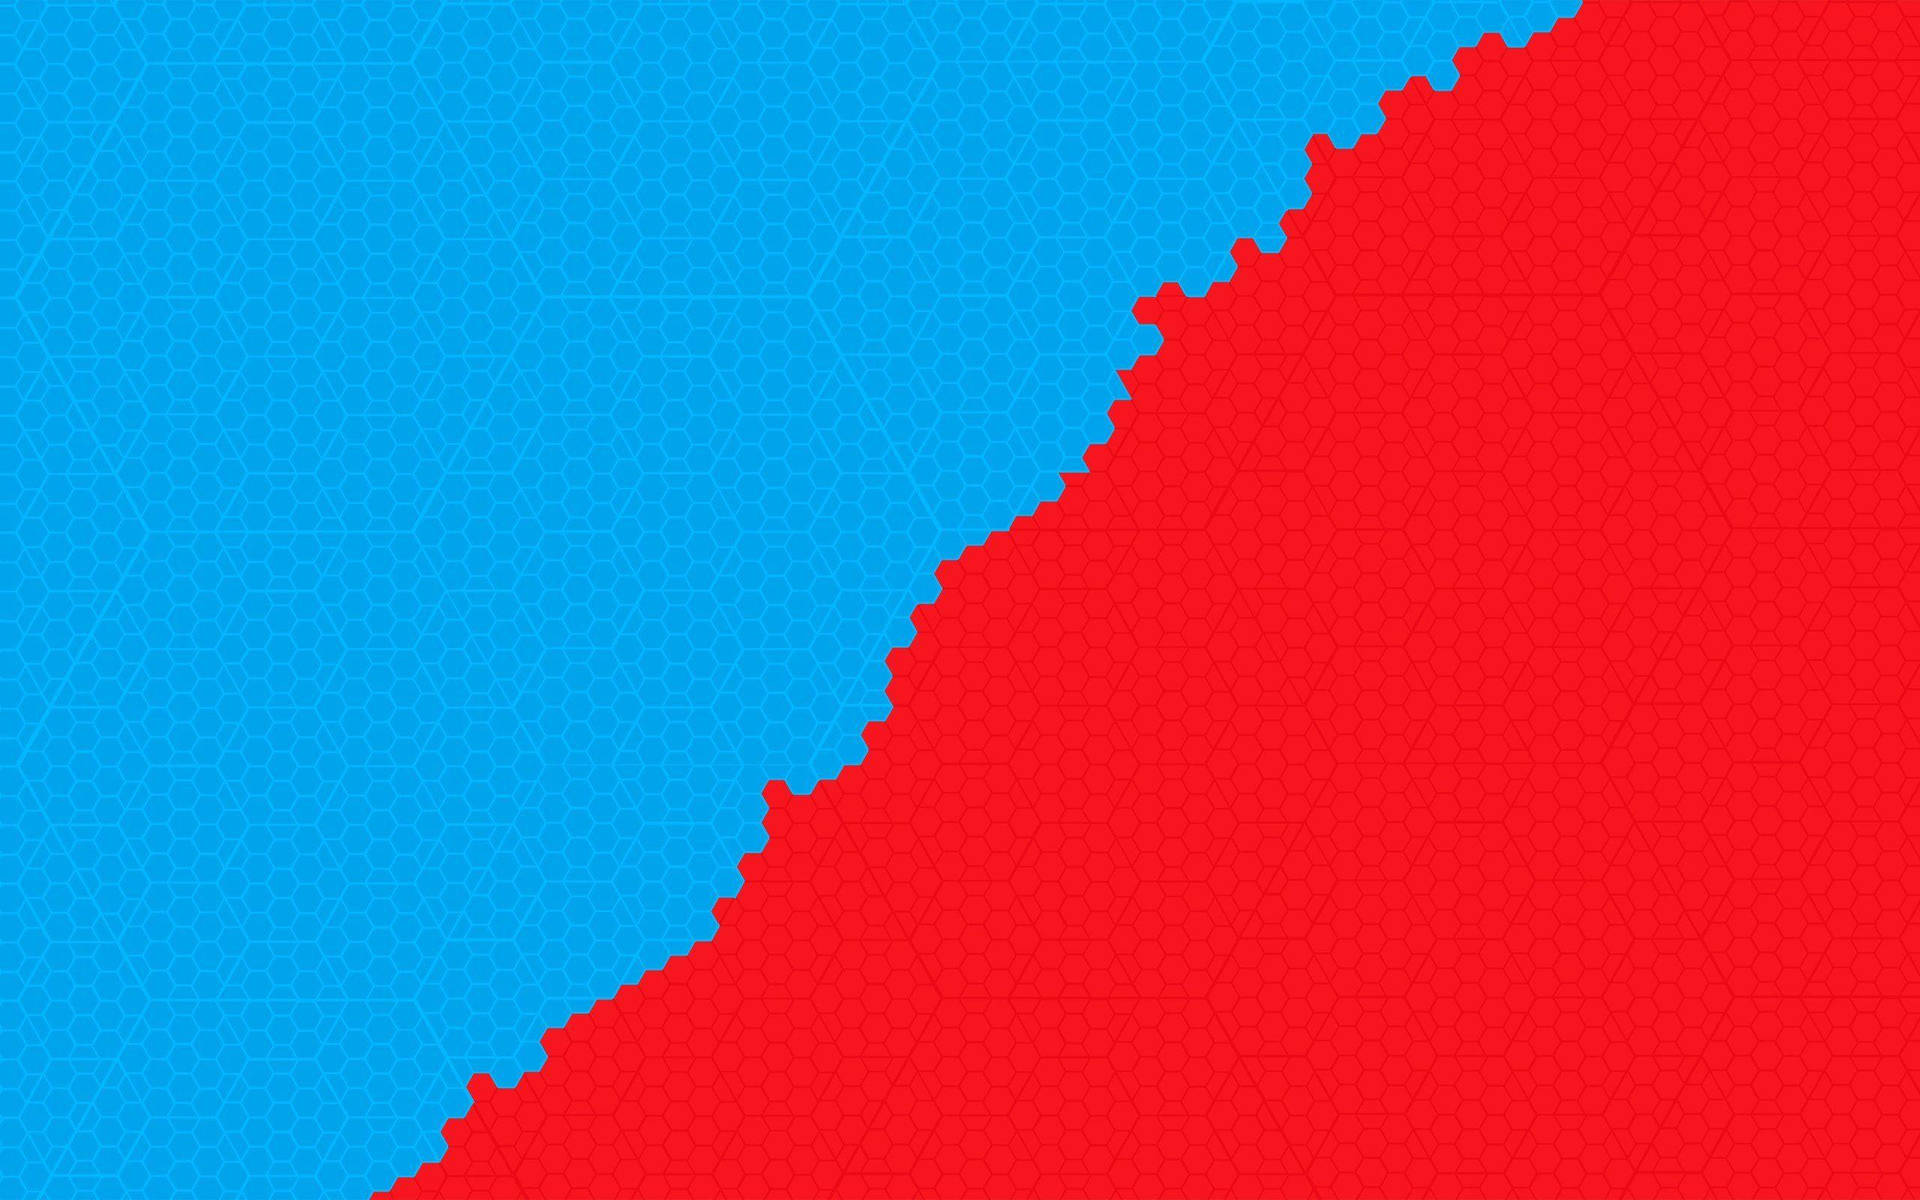 Abstract Red and Blue Hexagonal Pattern Art Wallpaper